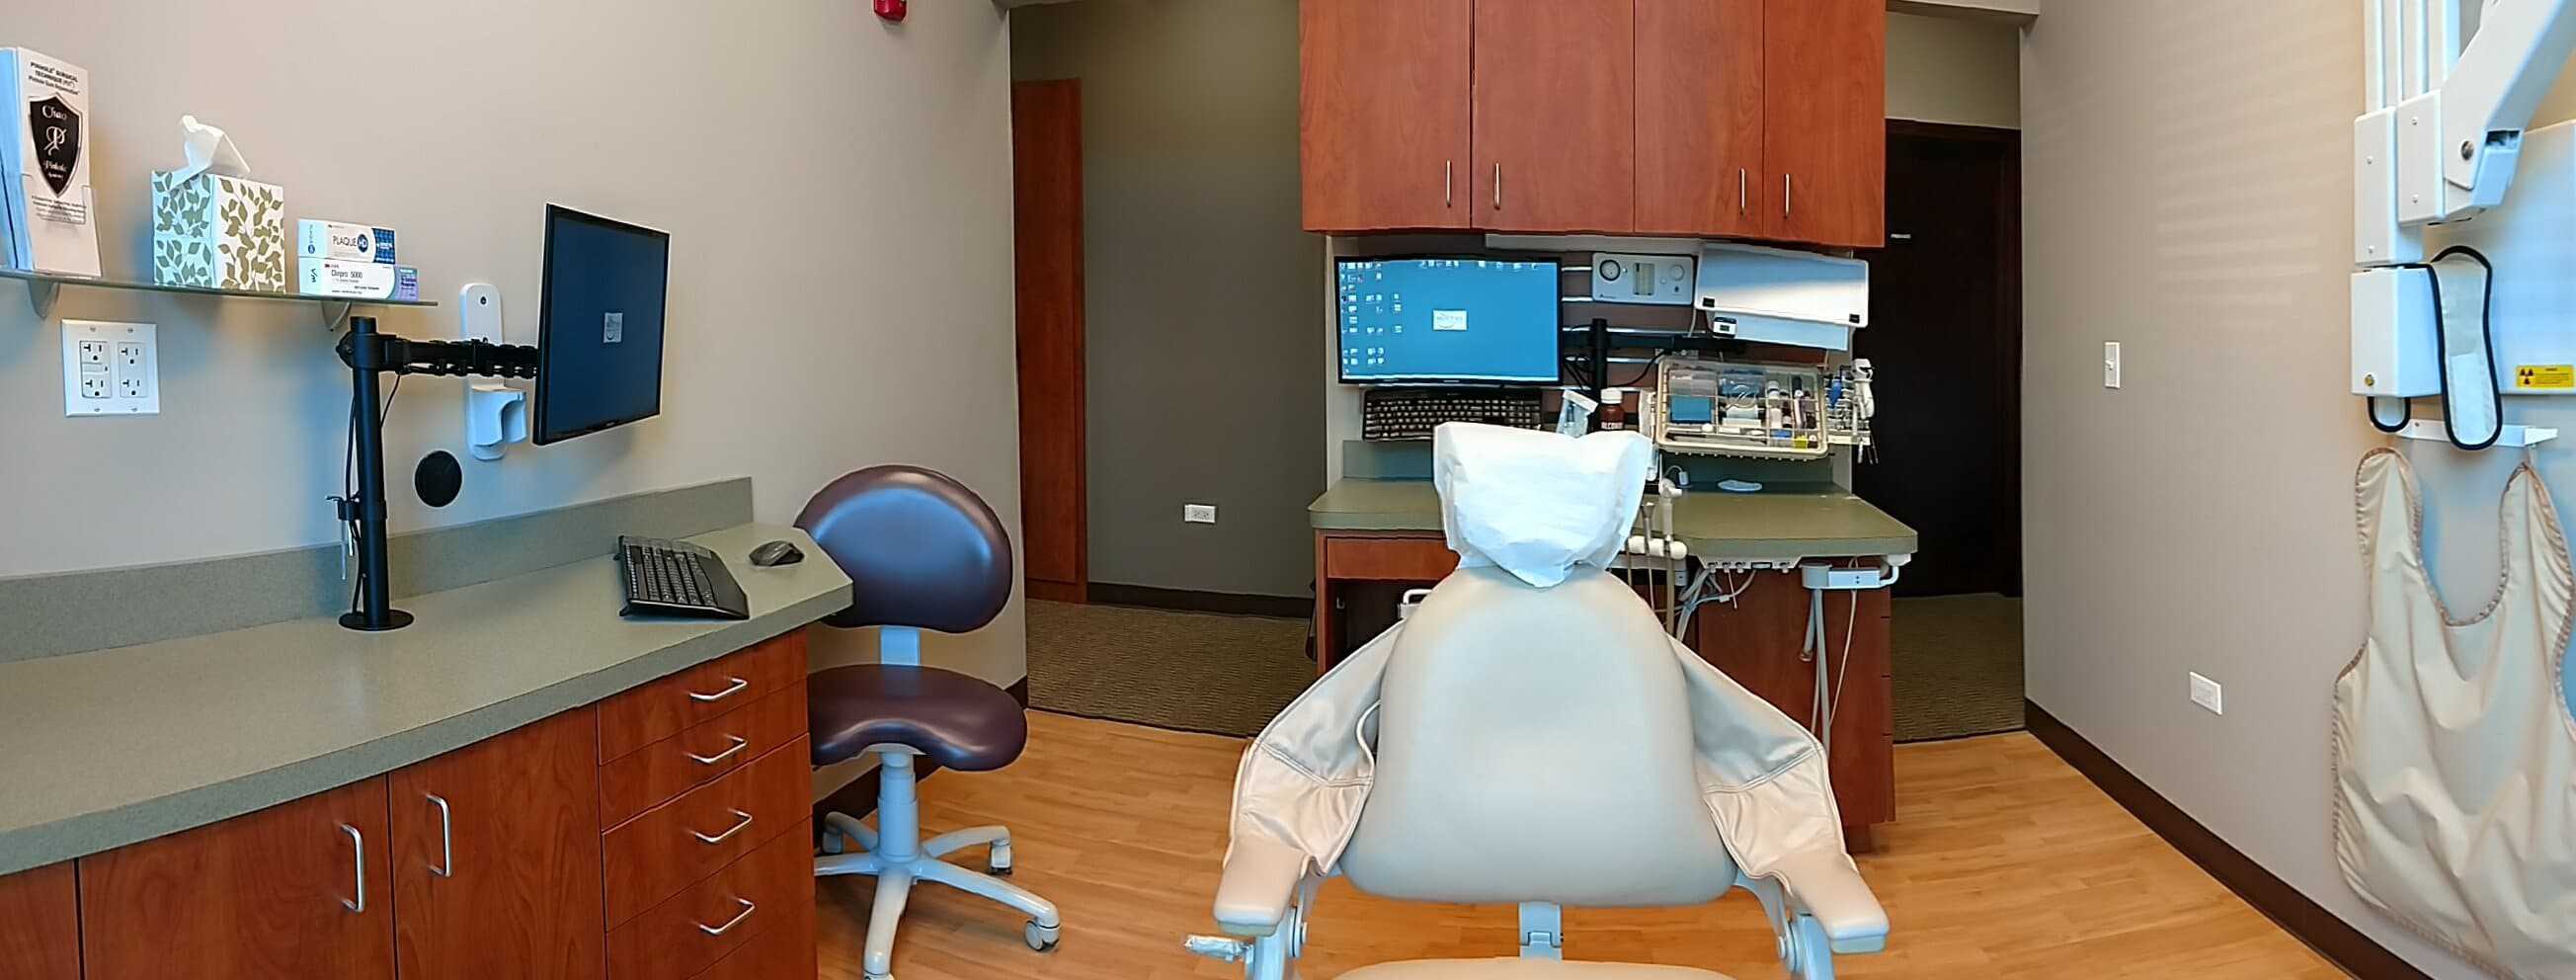 Dental patient treatment room